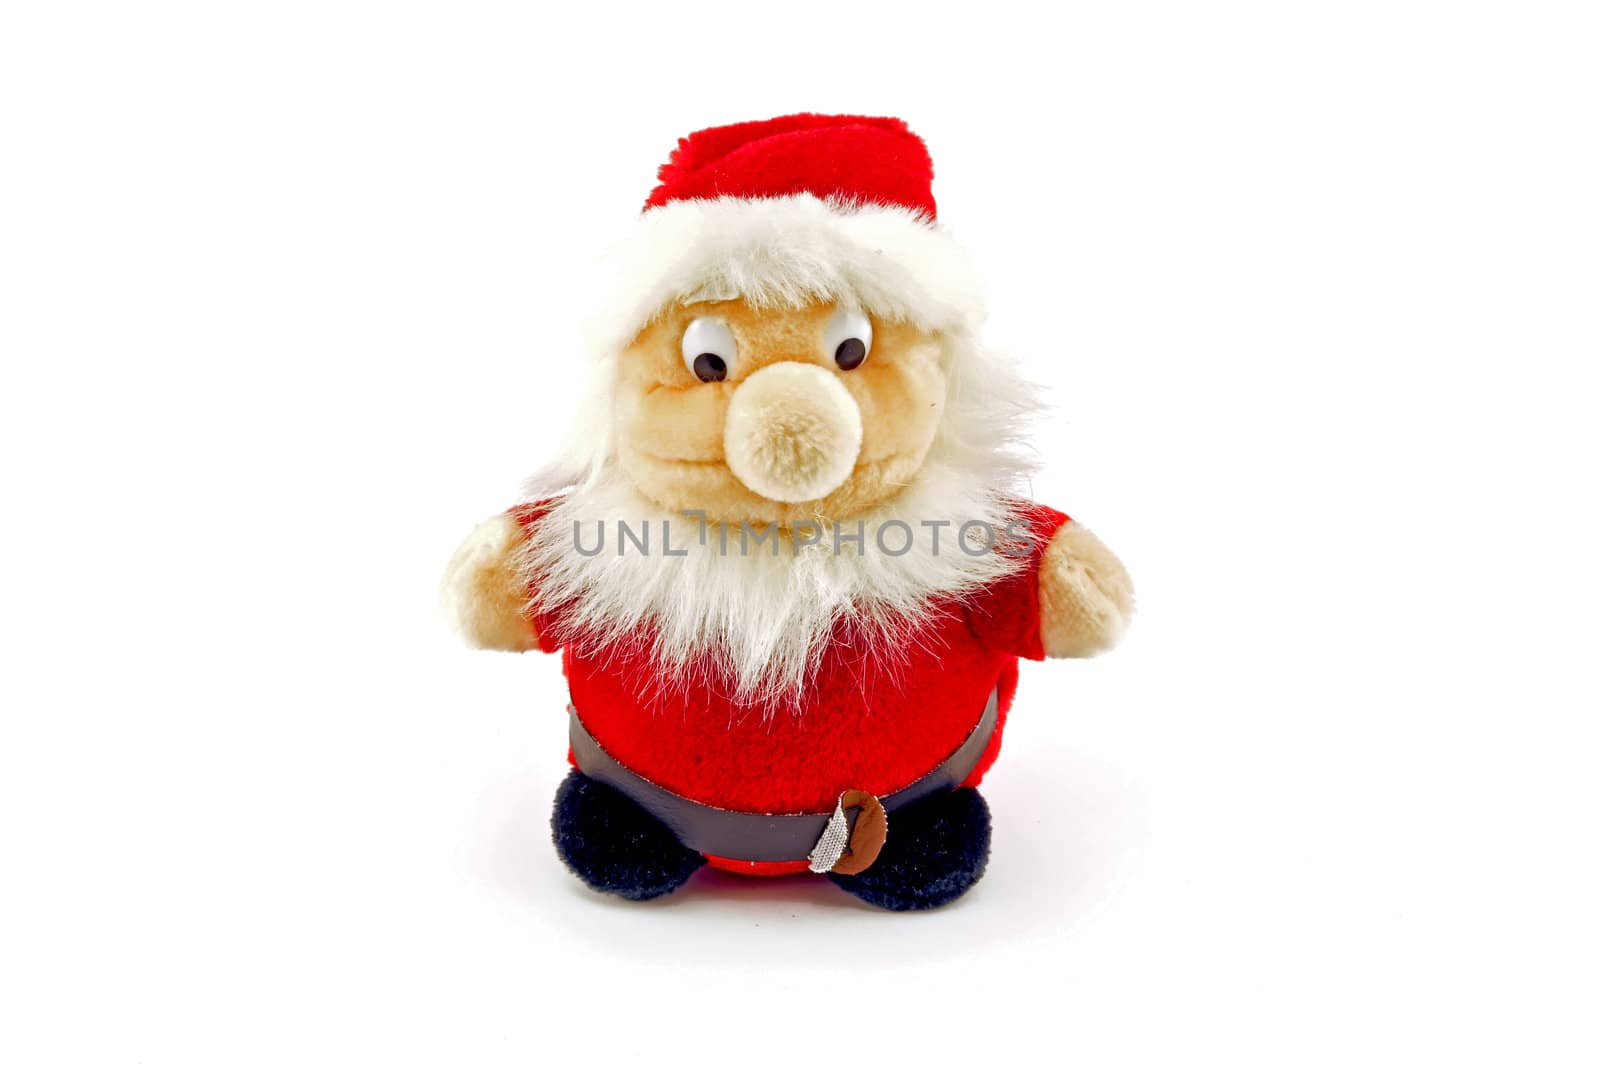 A plush figure dressed like Santa Claus